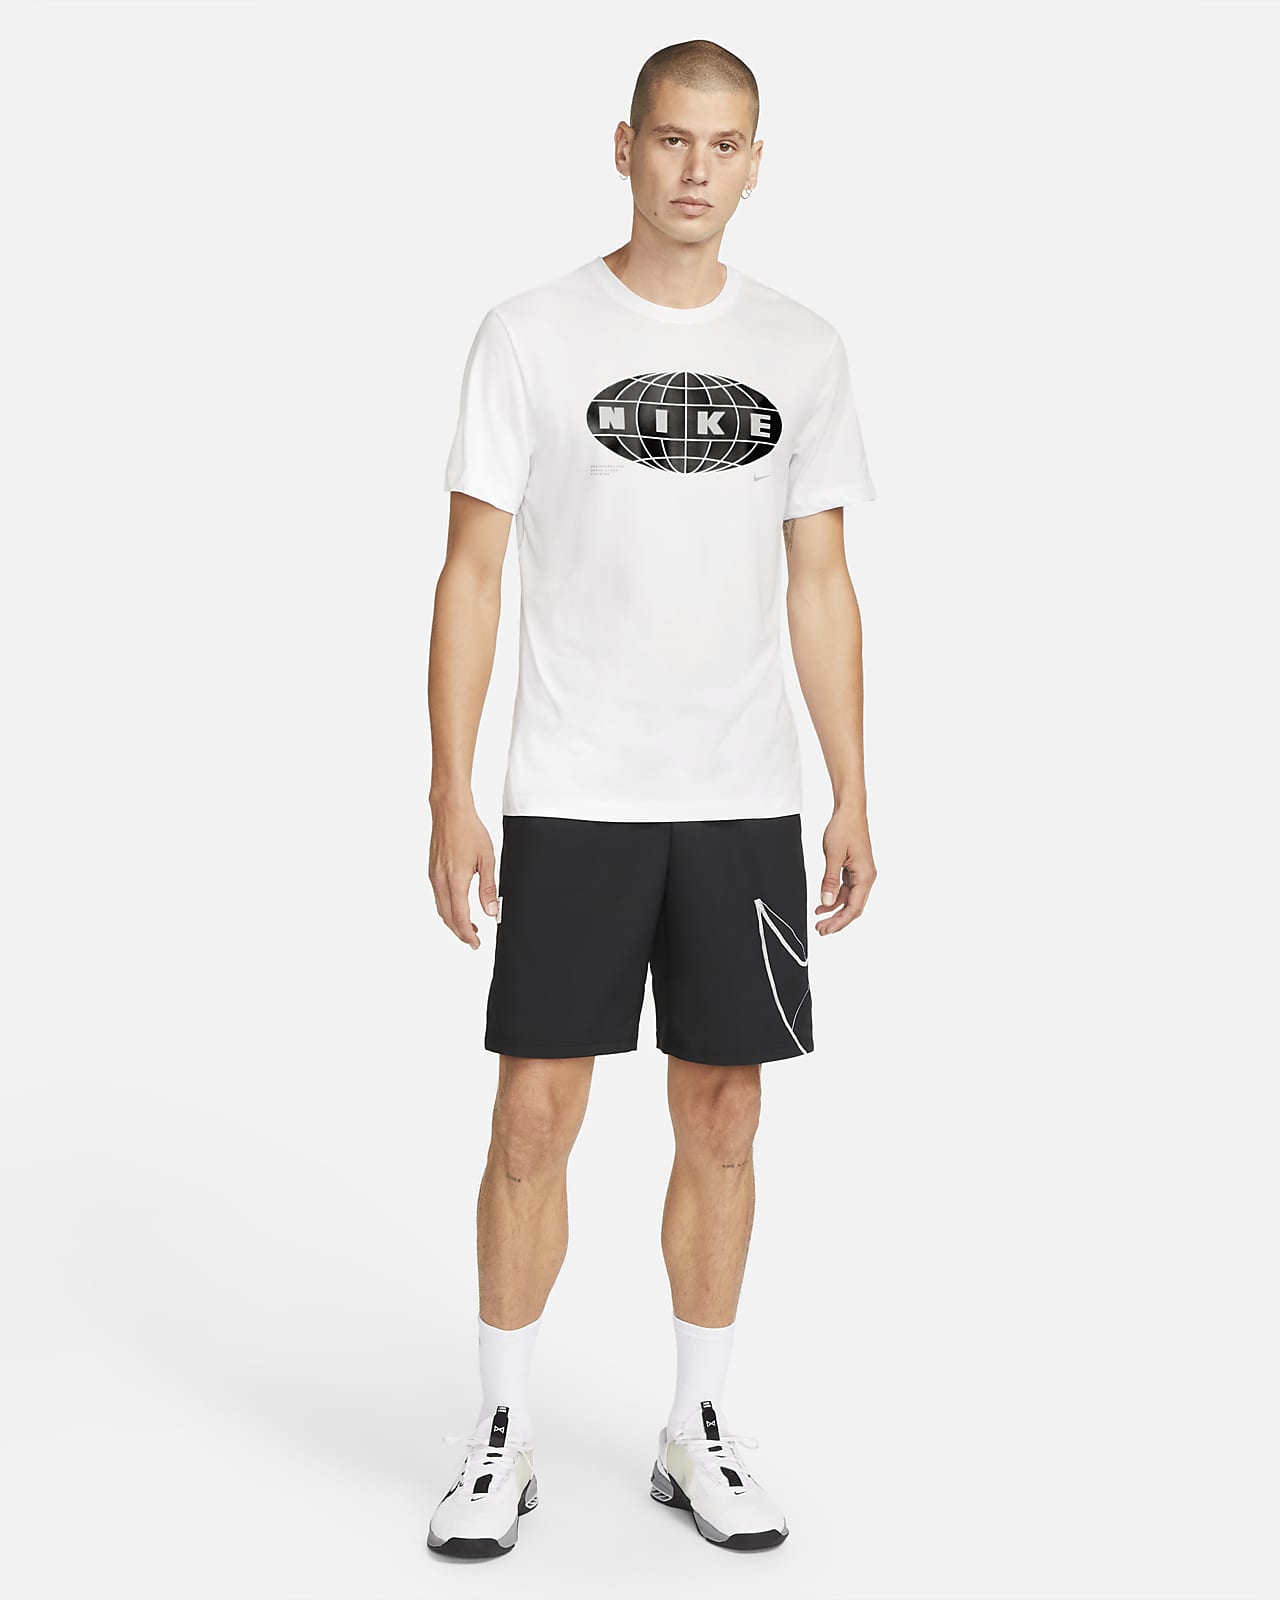 Nike Dri-FIT Men's Graphic Fitness T-Shirt. Nike LU